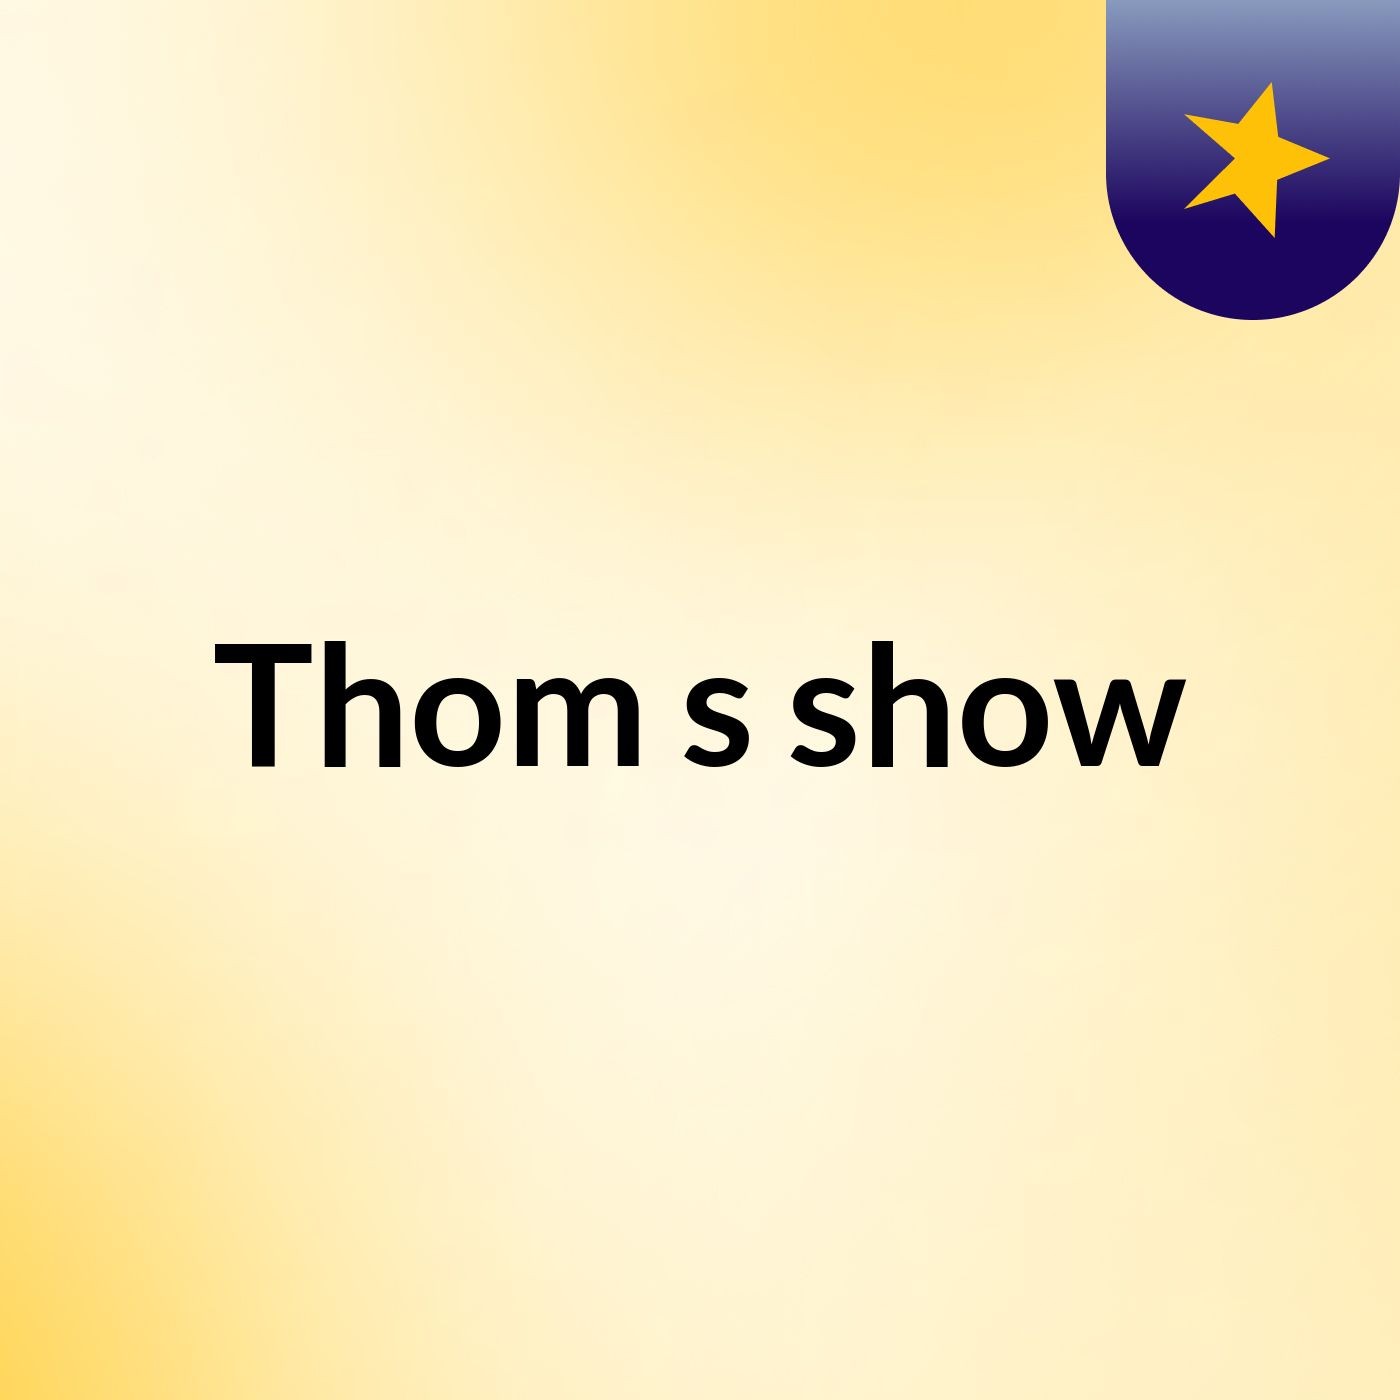 Thom's show